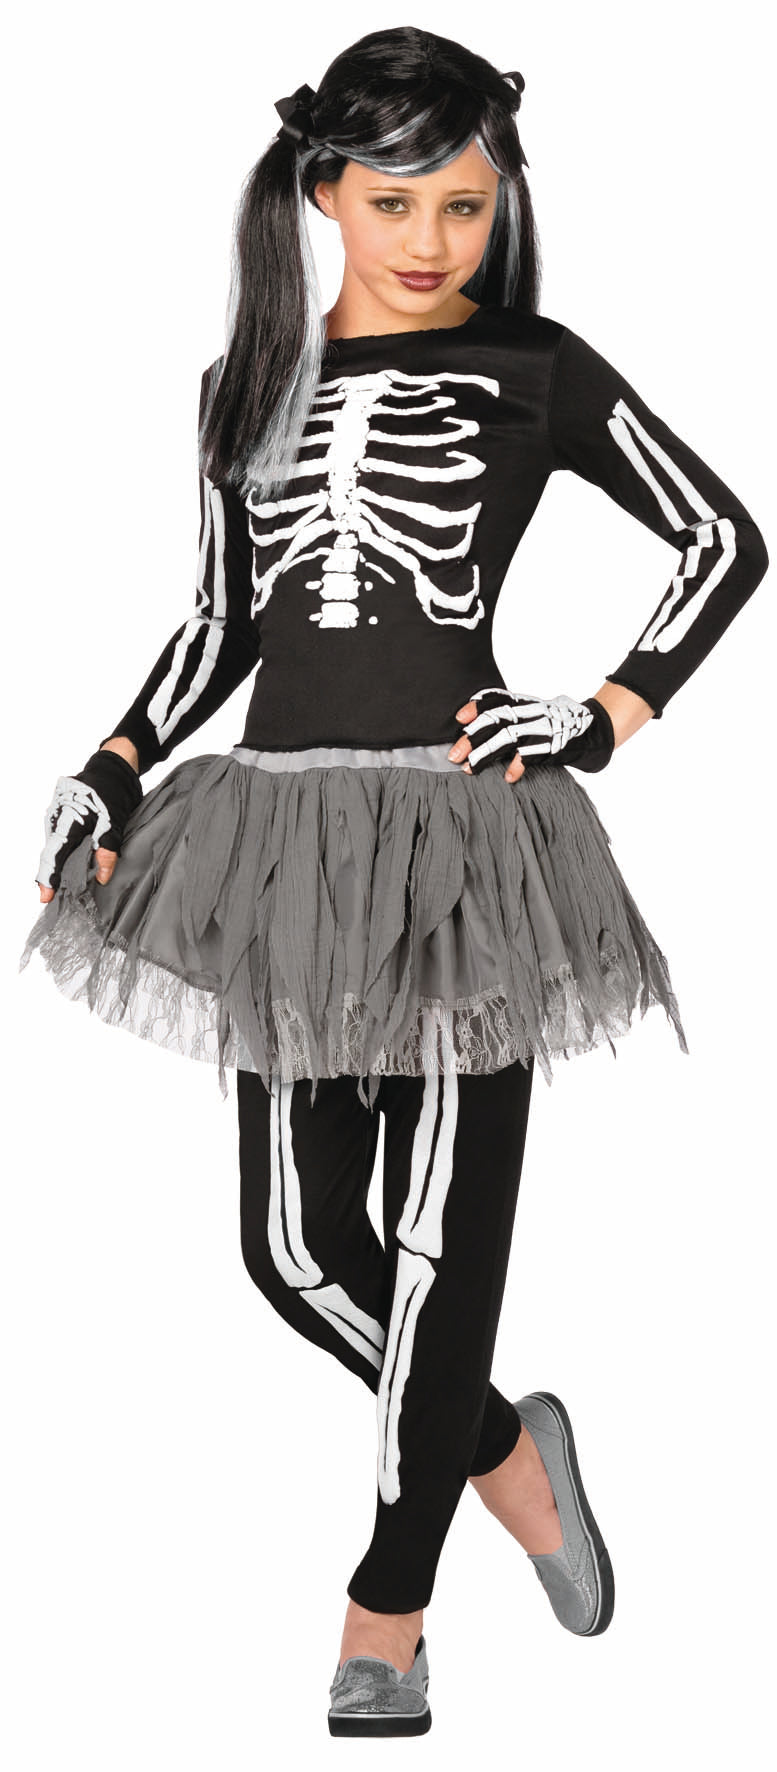 White Skeleton Child's Costume